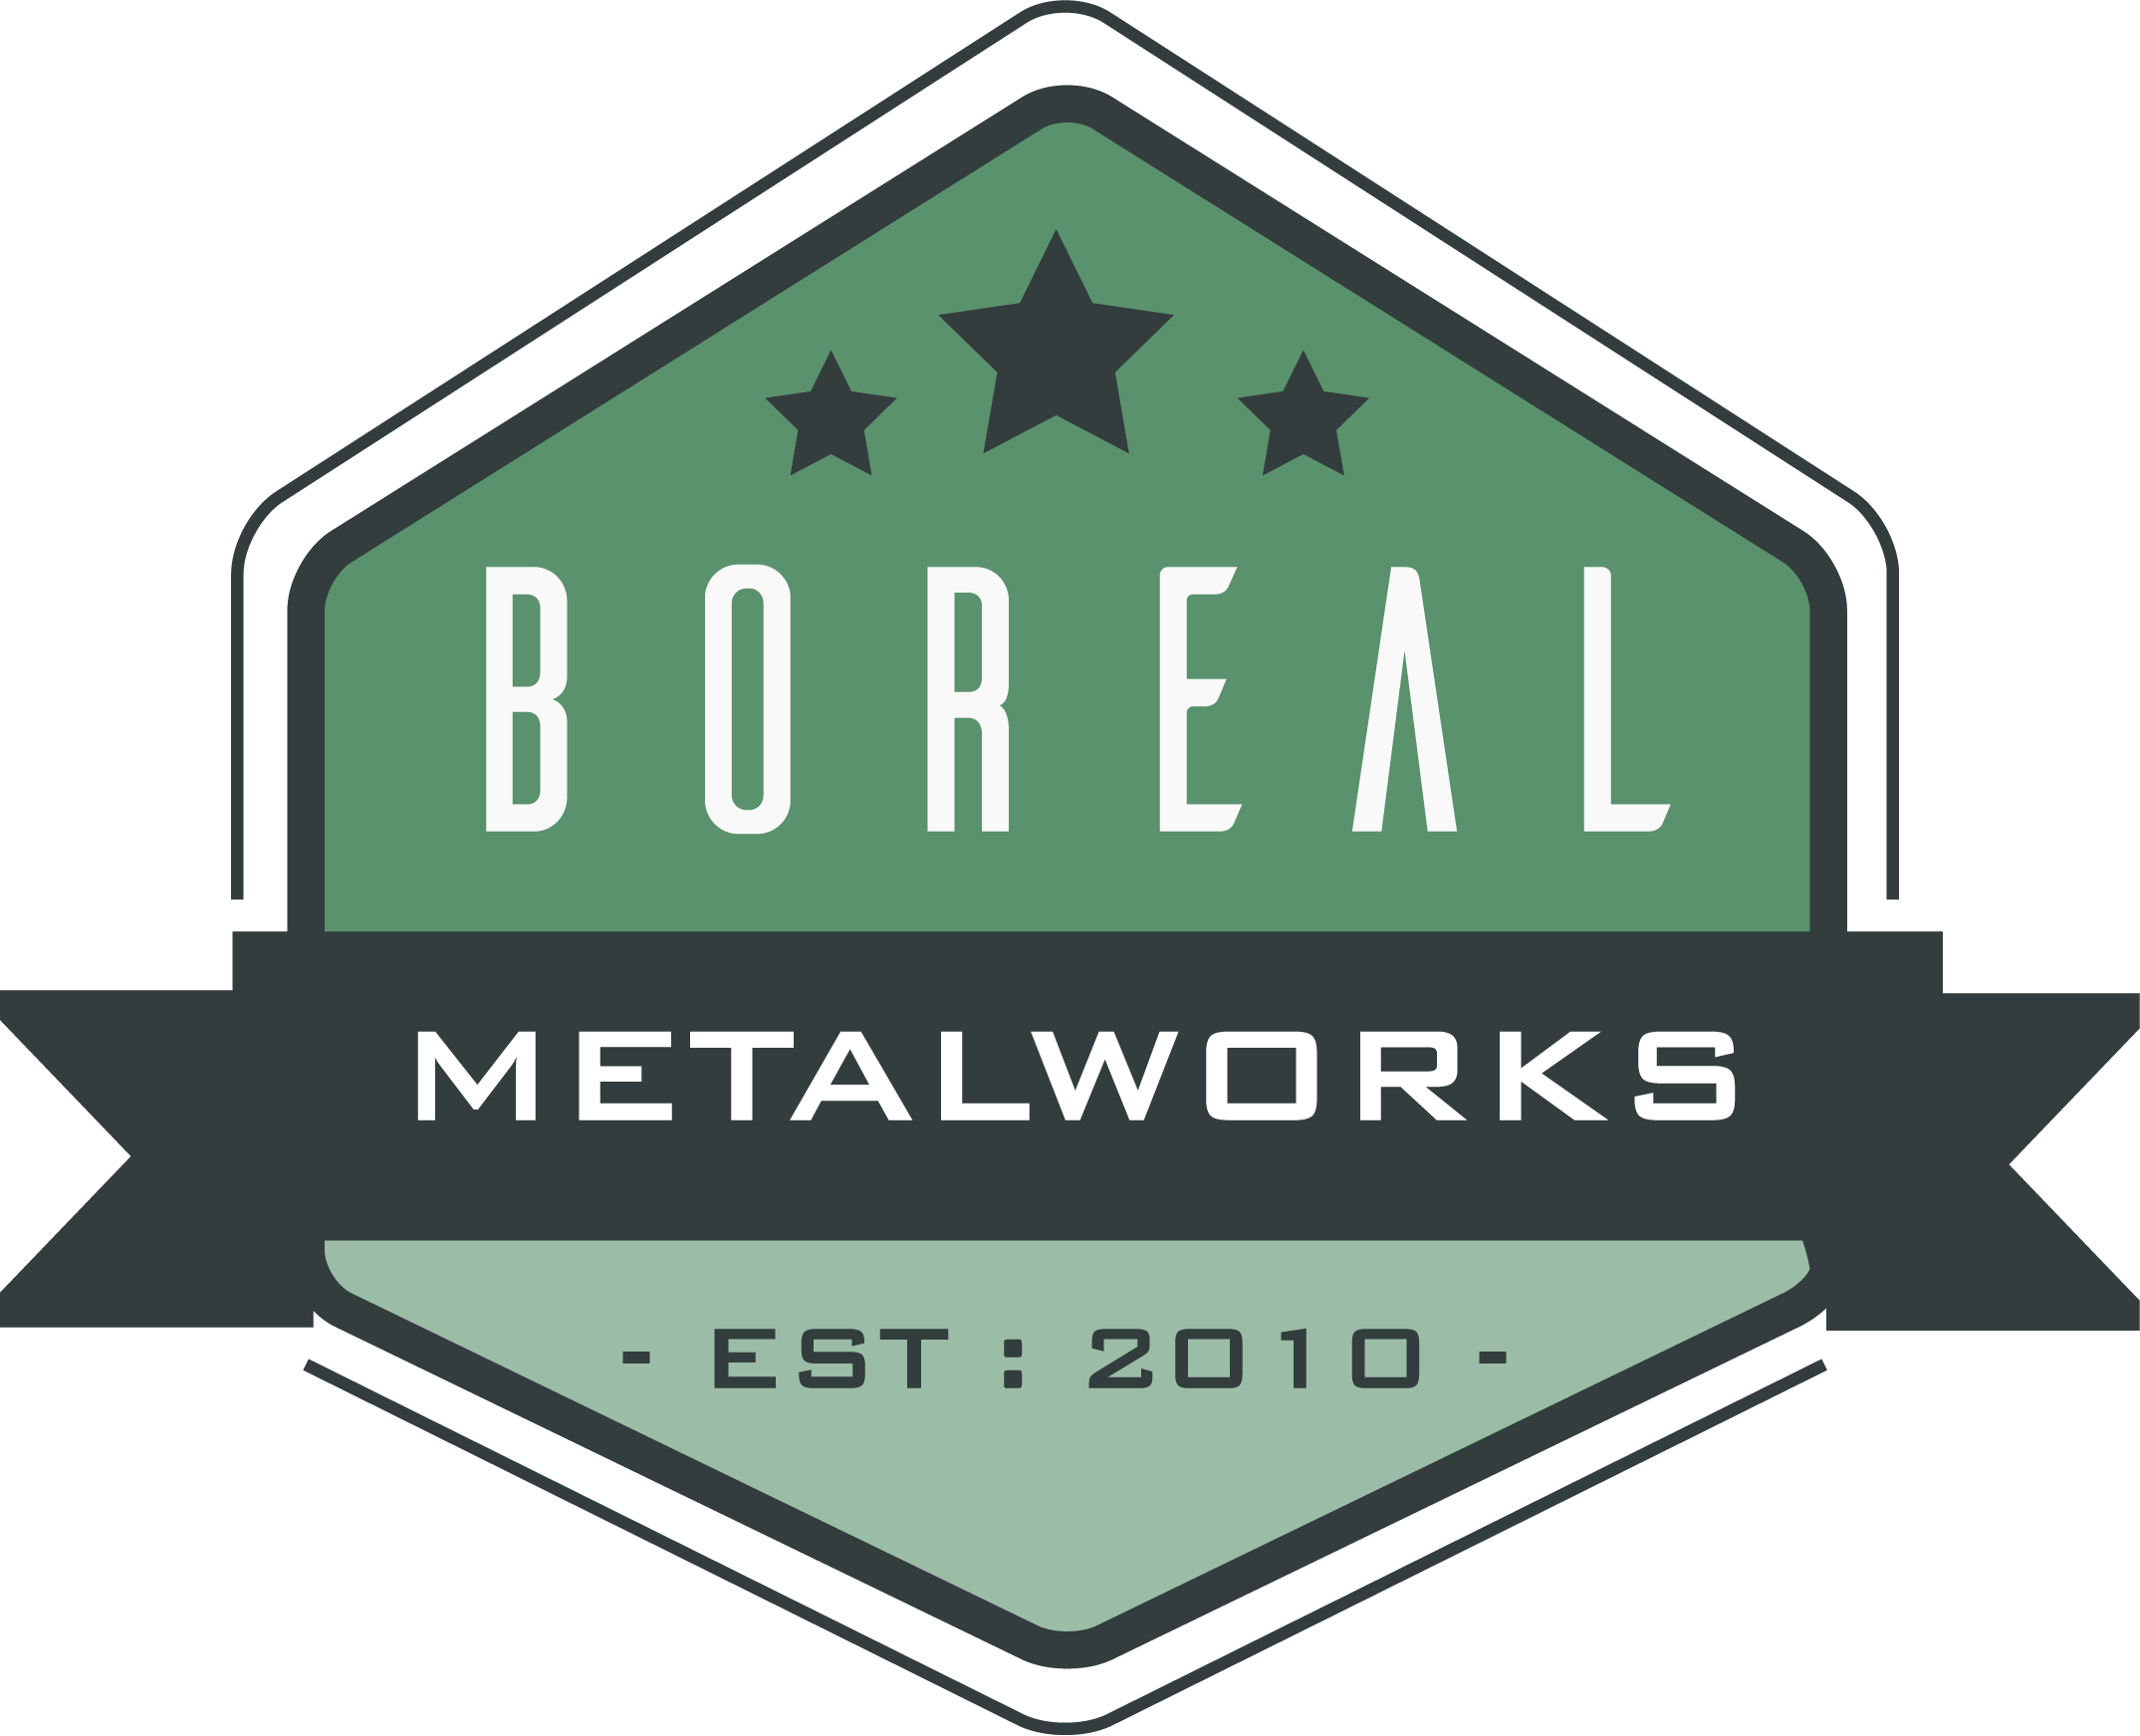 Boreal Metalworks